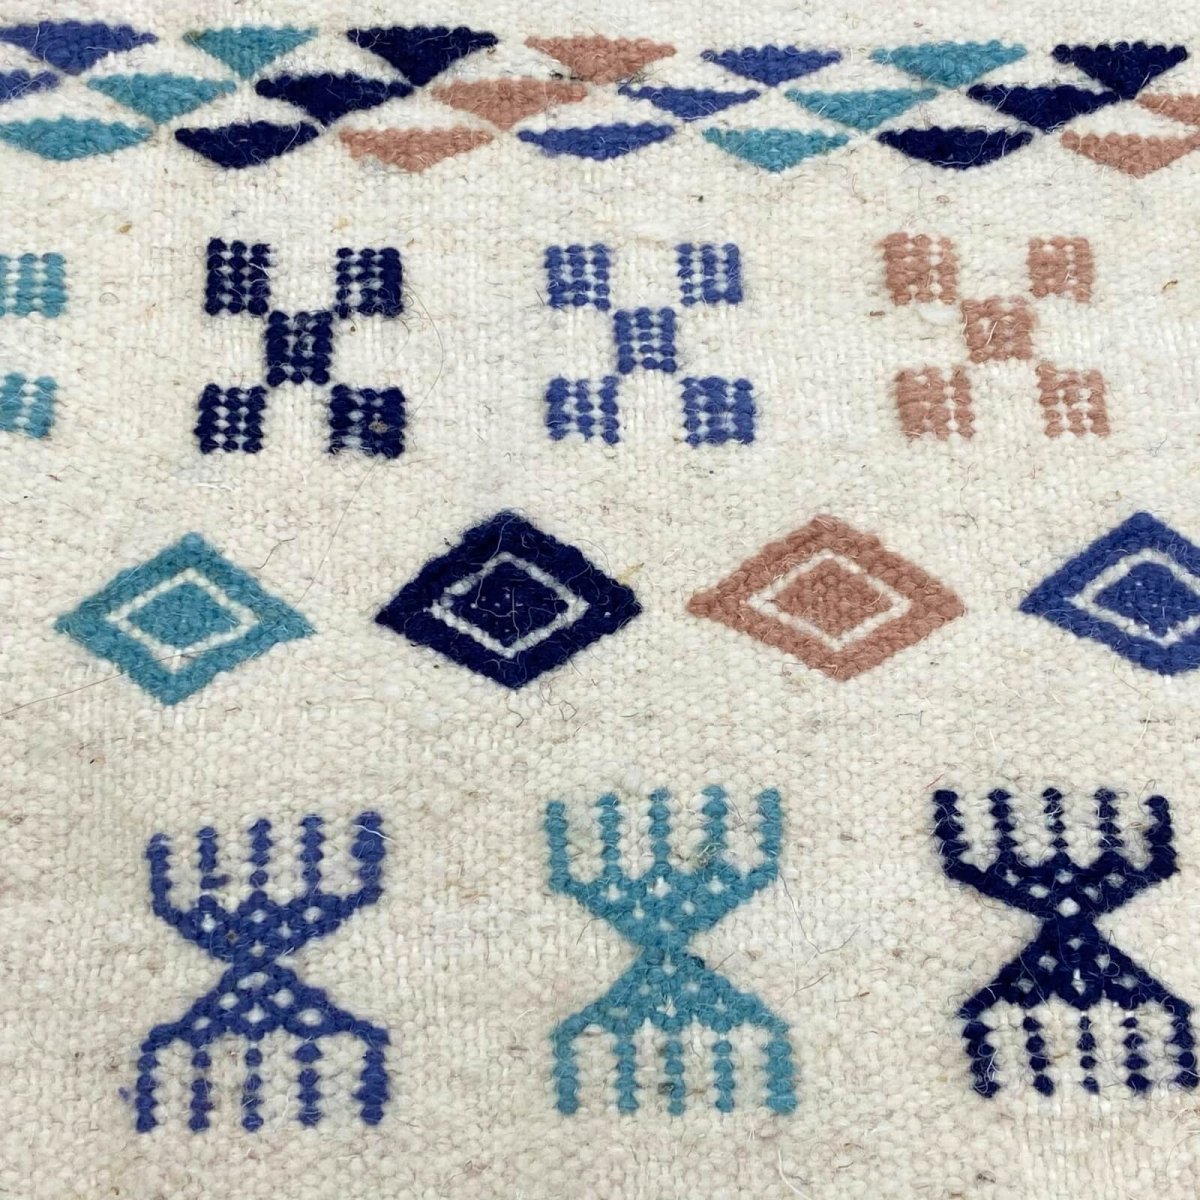 Tapis berbère Tapis Kilim 135x205 cm Blanc Bleu Marron | Tissé main, Laine, Tunisie Tapis kilim tunisien style tapis marocain. T